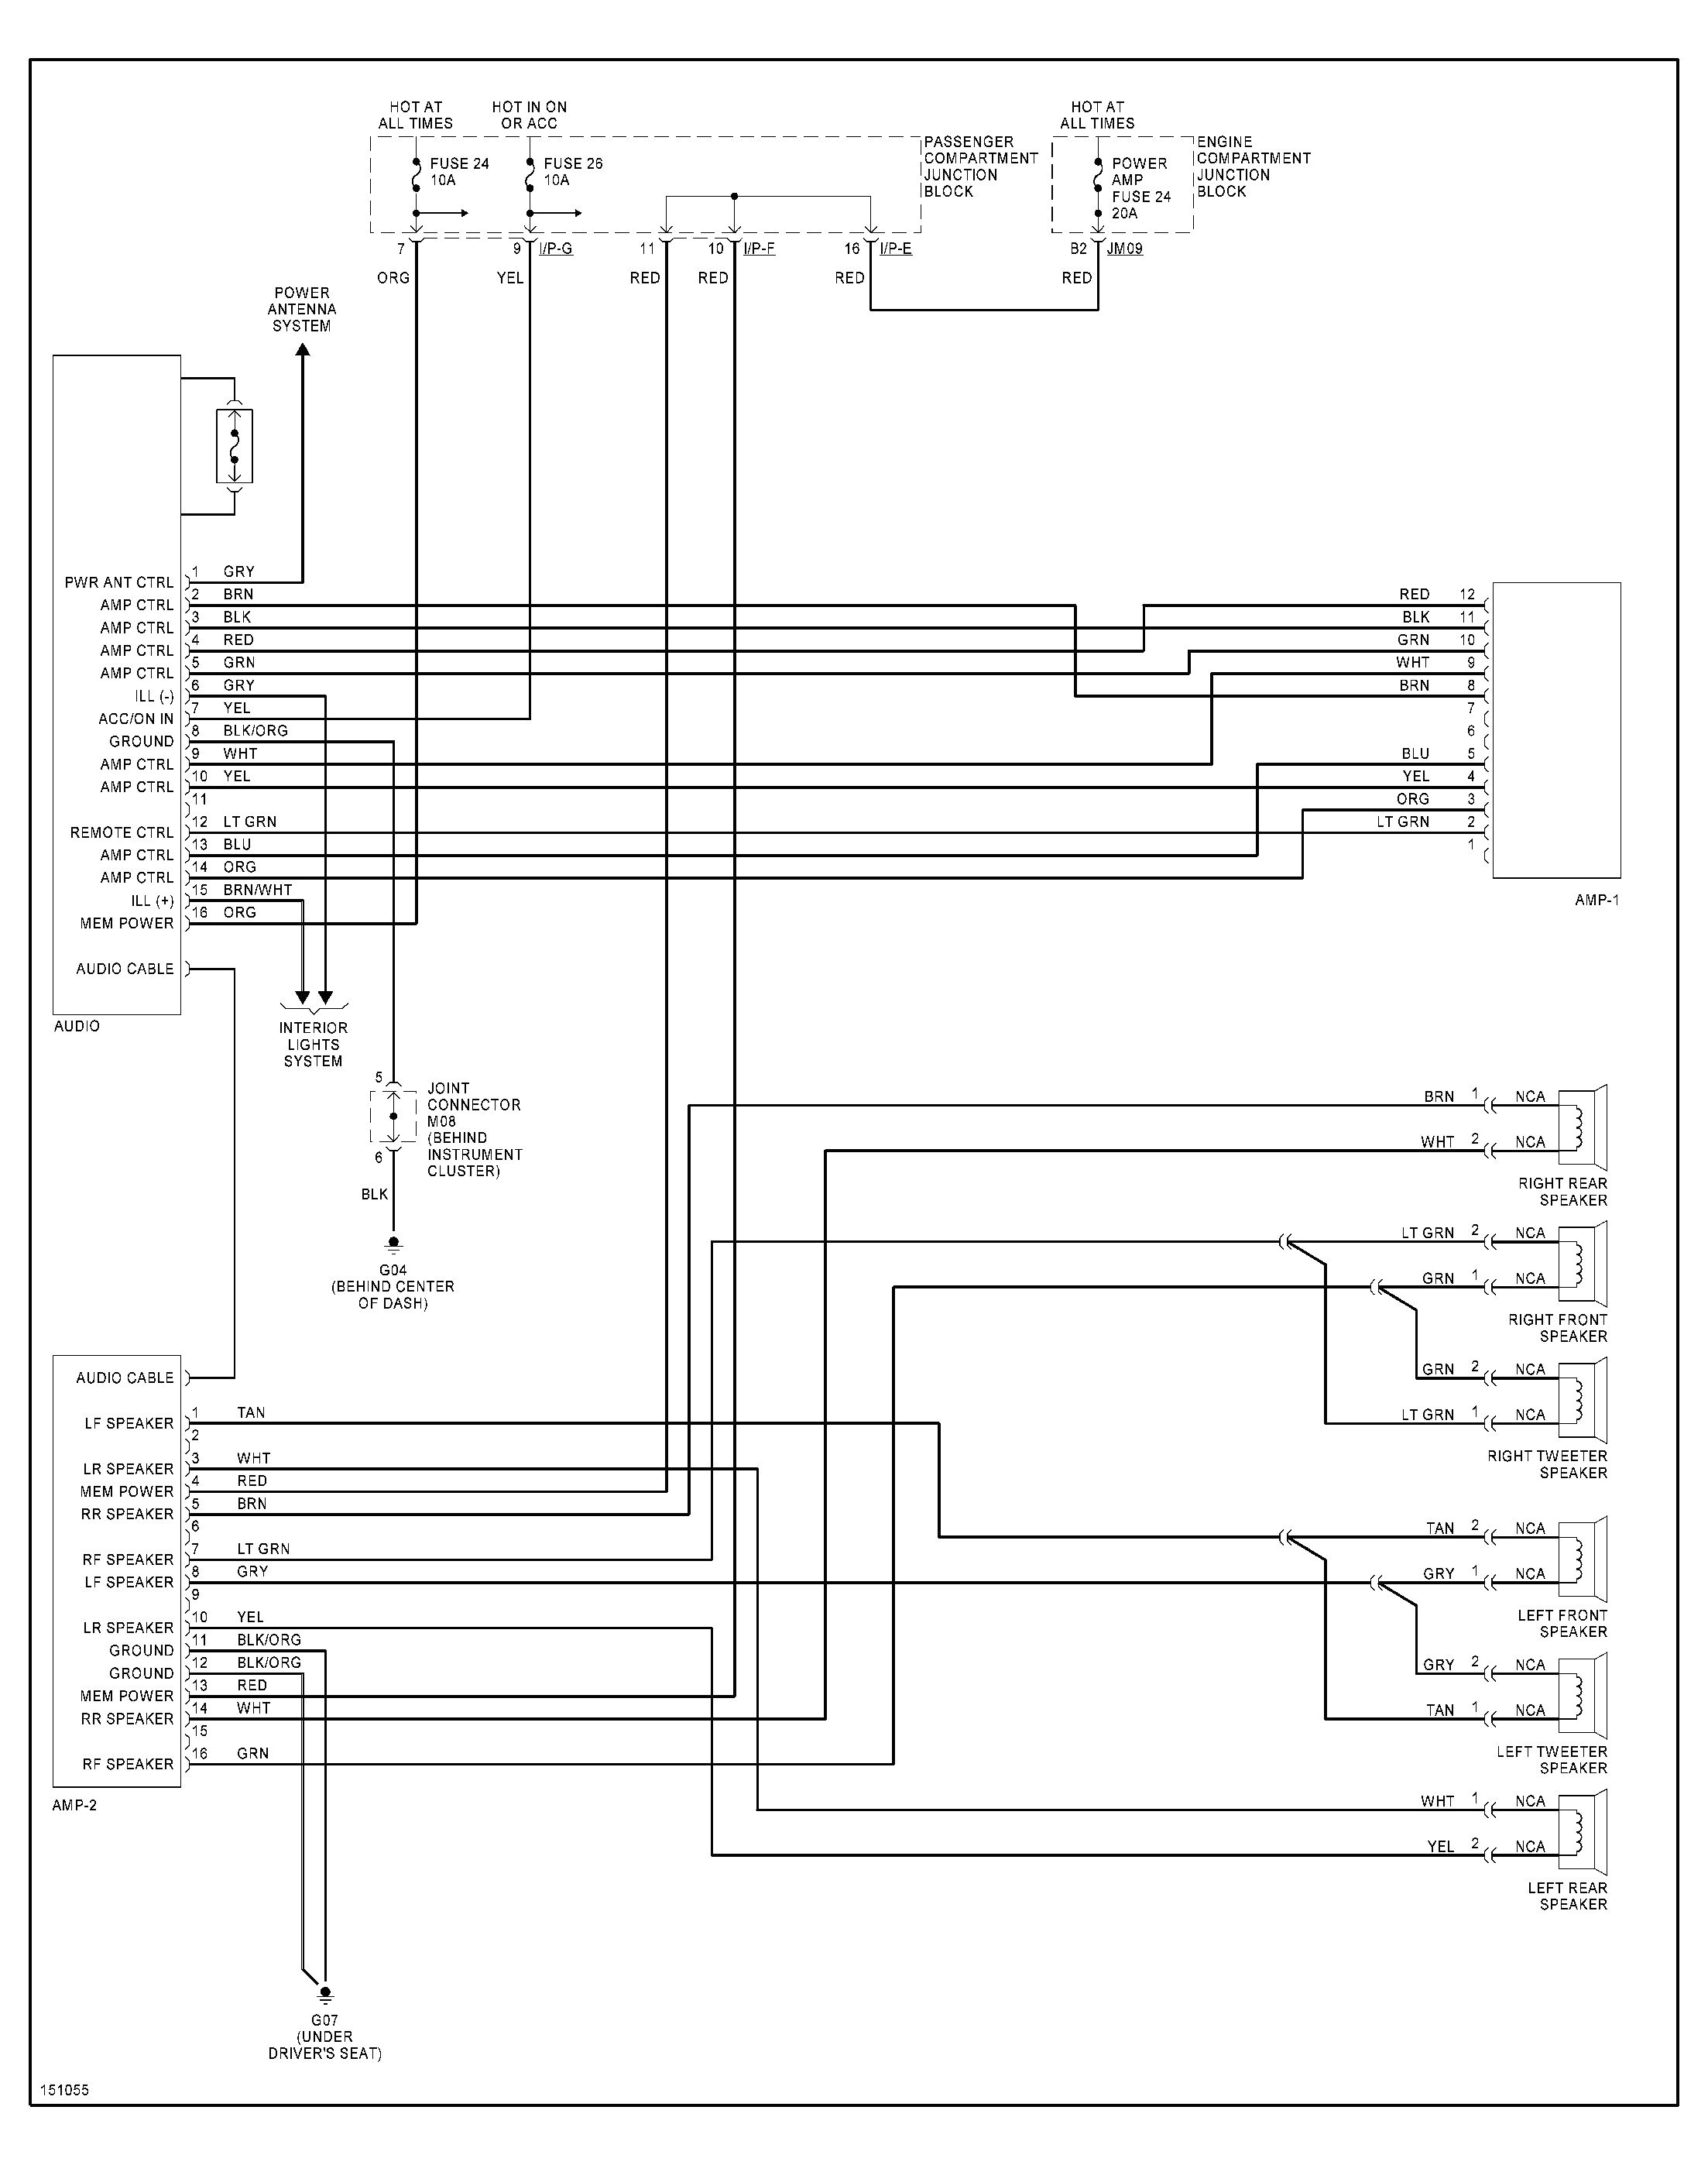 1992 hyundai wiring diagram use wiring diagram 1992 hyundai wiring diagram